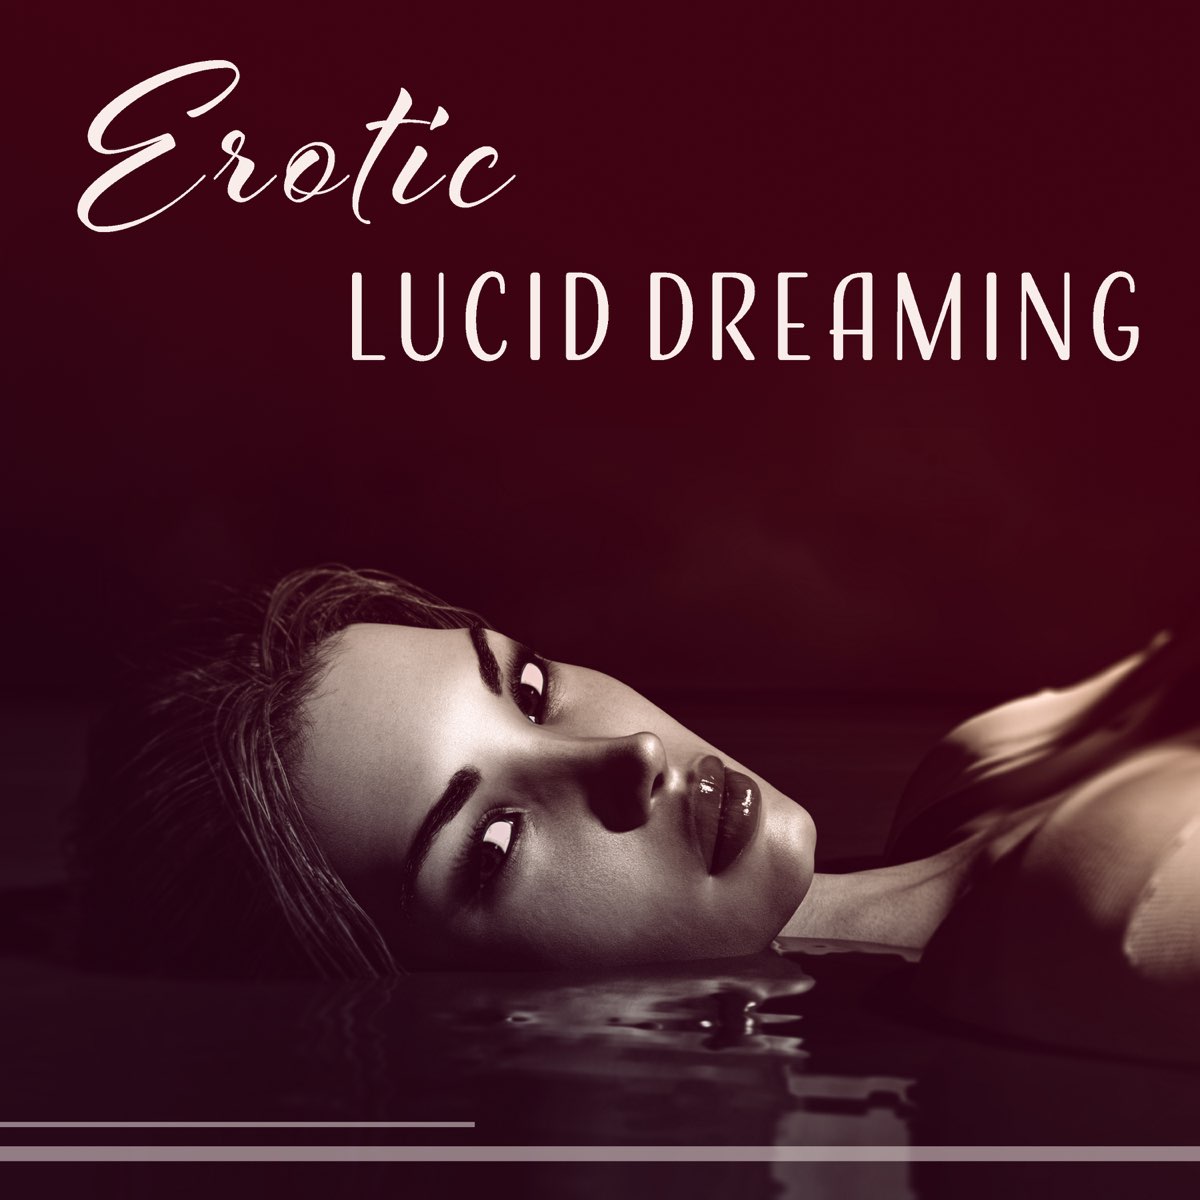 Erotic lucid dreaming